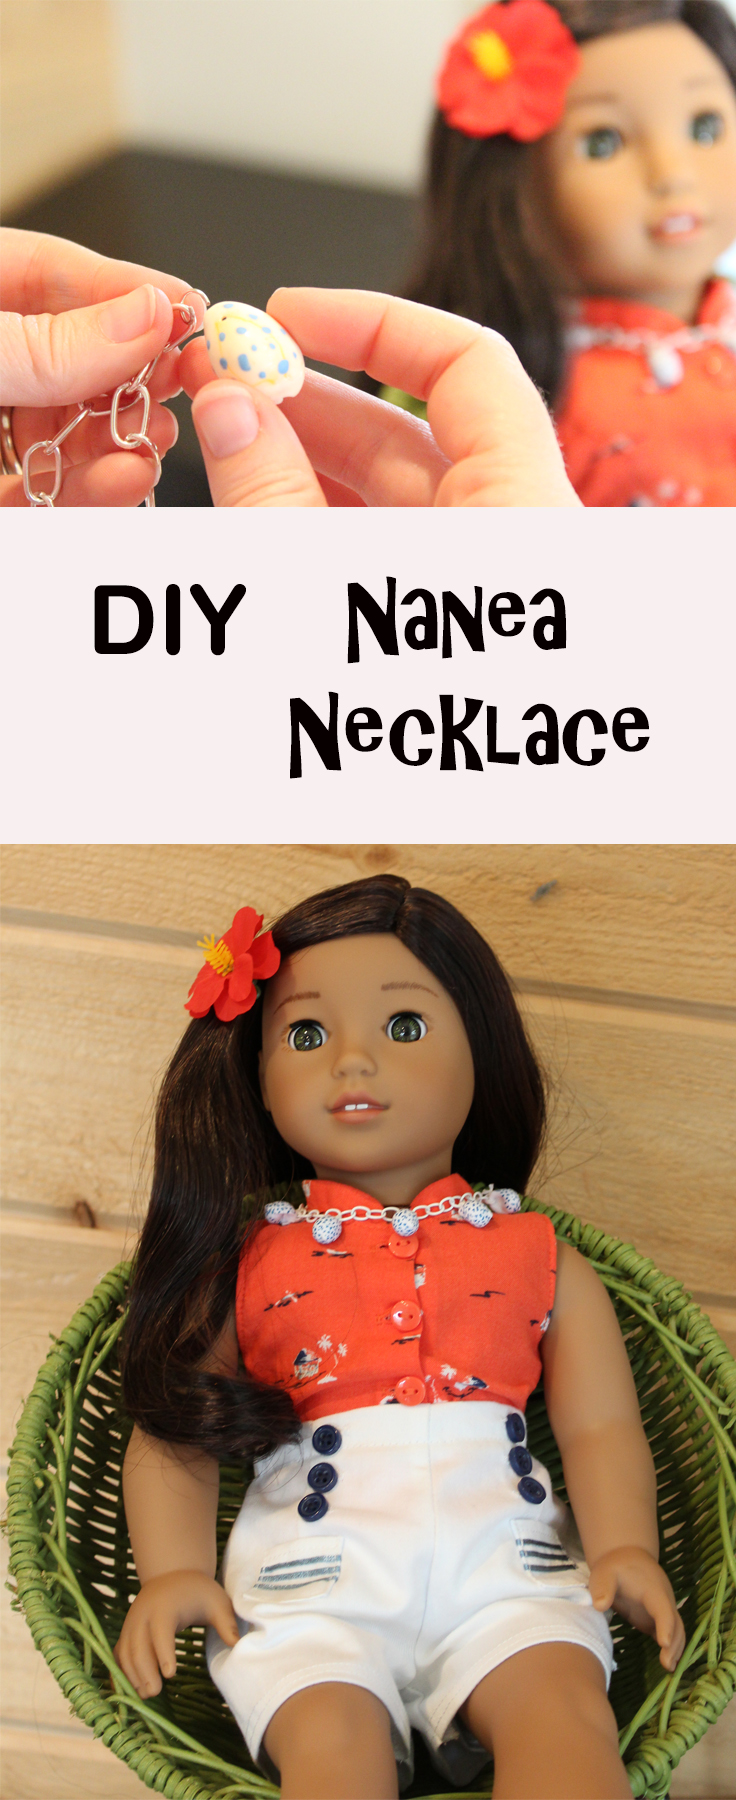 Nanea Necklace DIY instructions